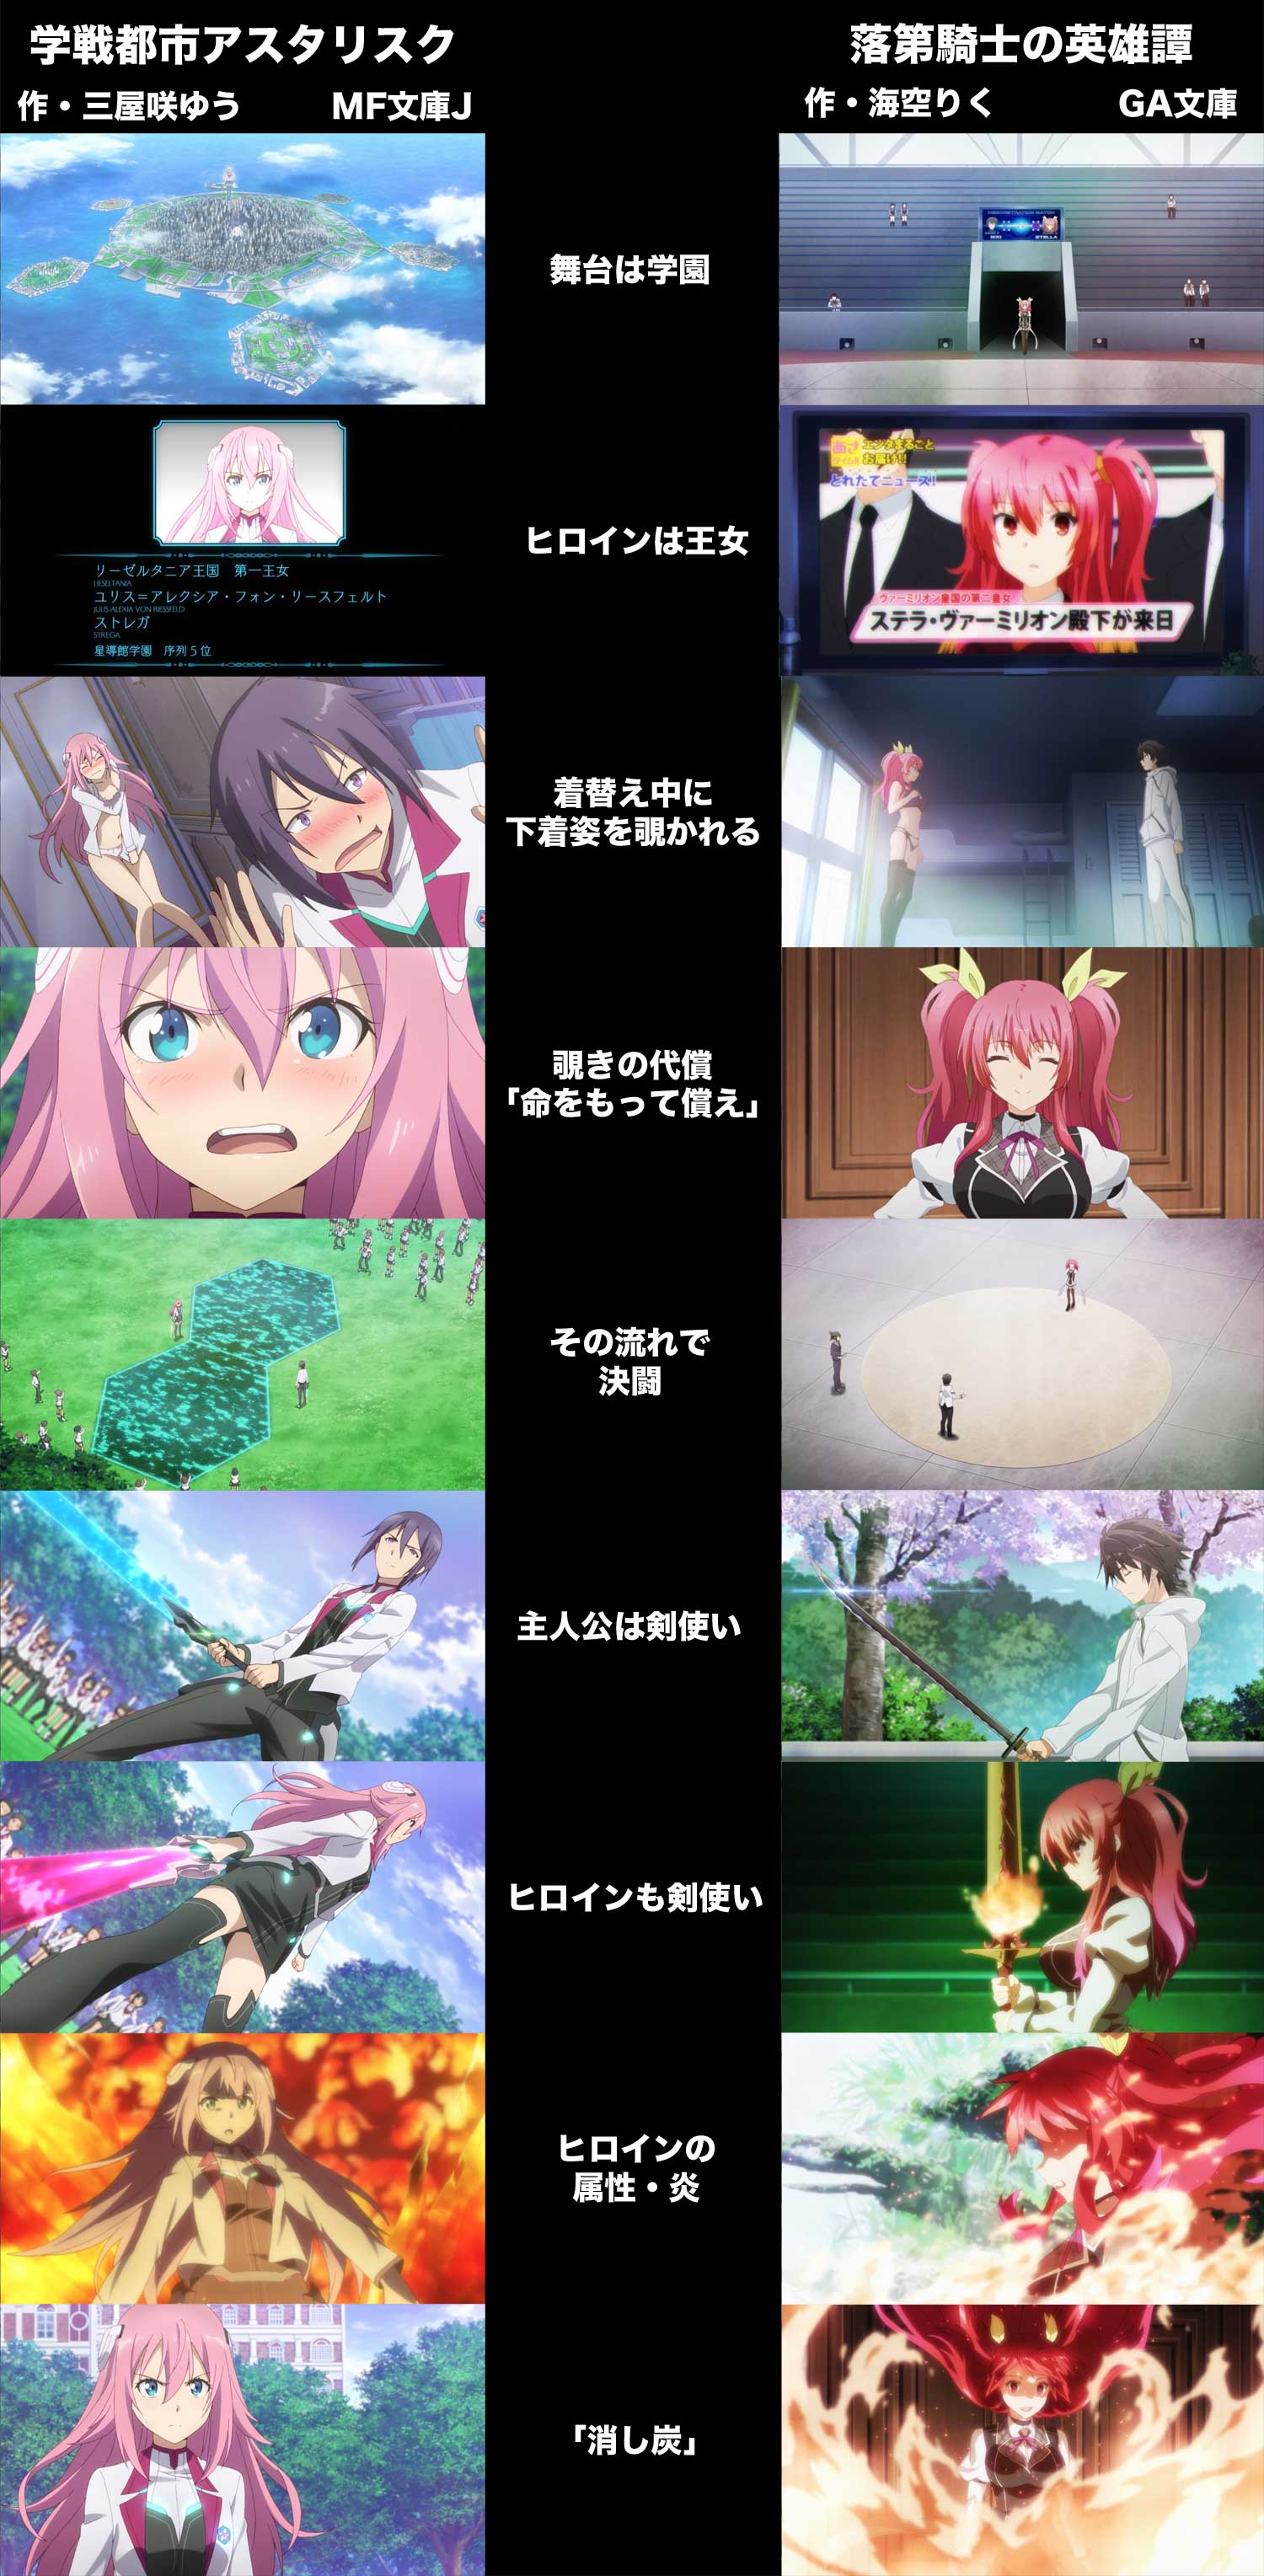 Side by side comparison of Gakusen Toshi Asterisk with Rakudai Kishi no  Cavalry : r/anime